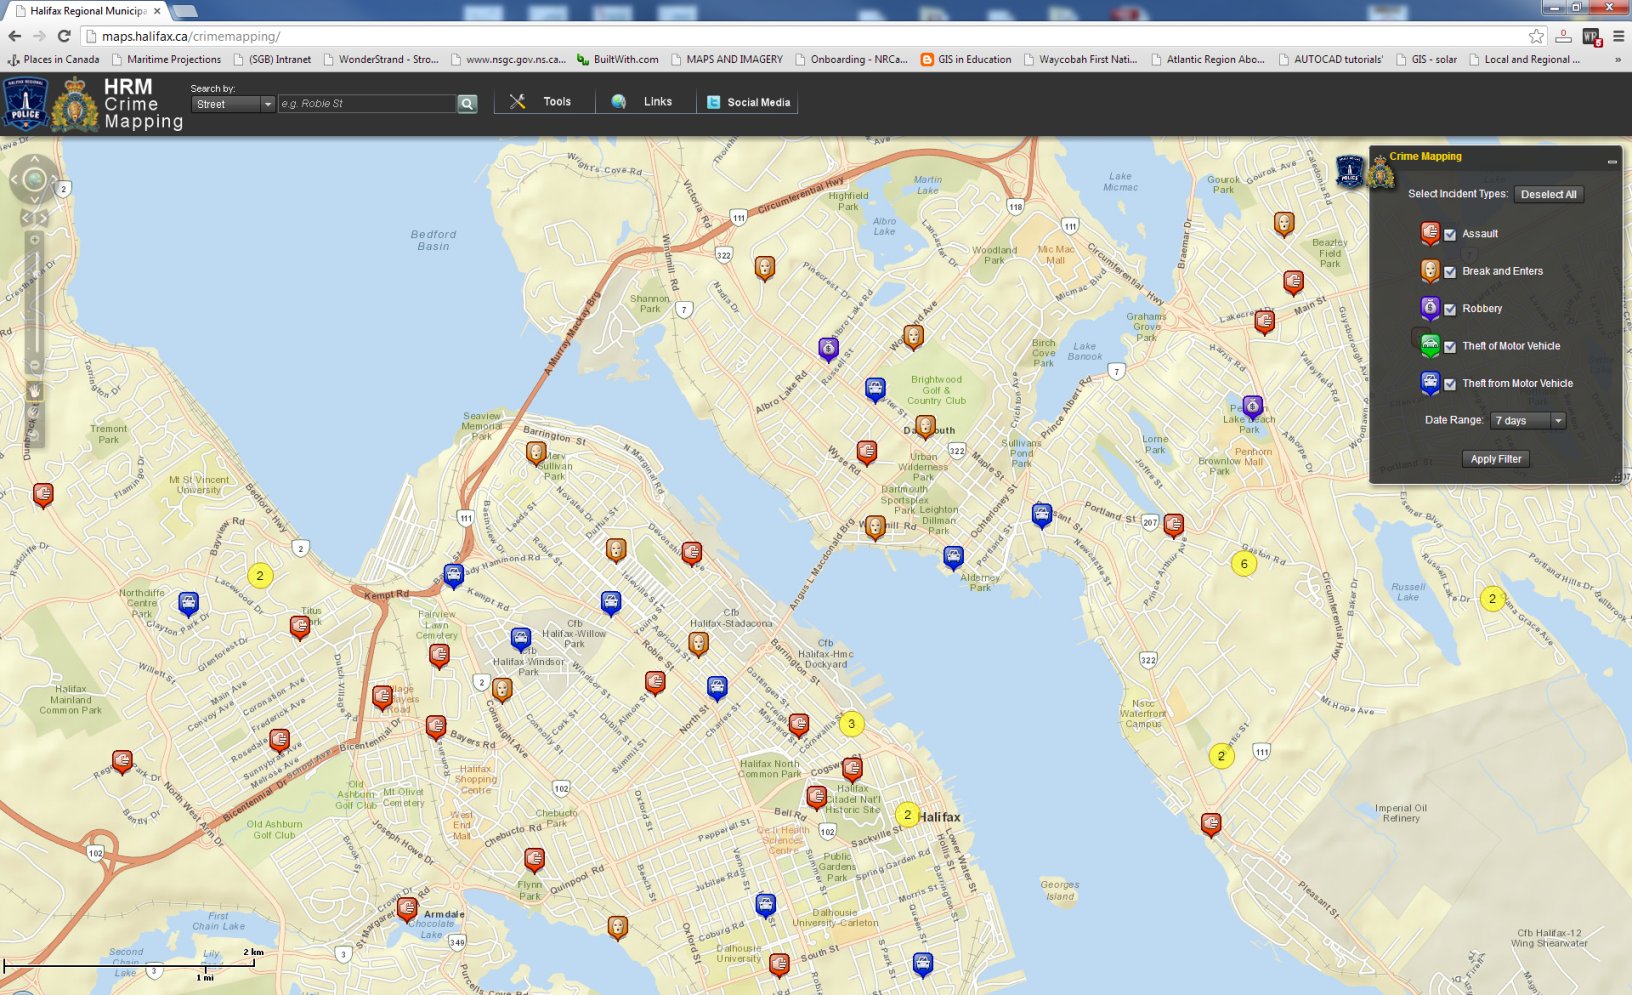 Halifax Regional Municipality Crime Mapping Application